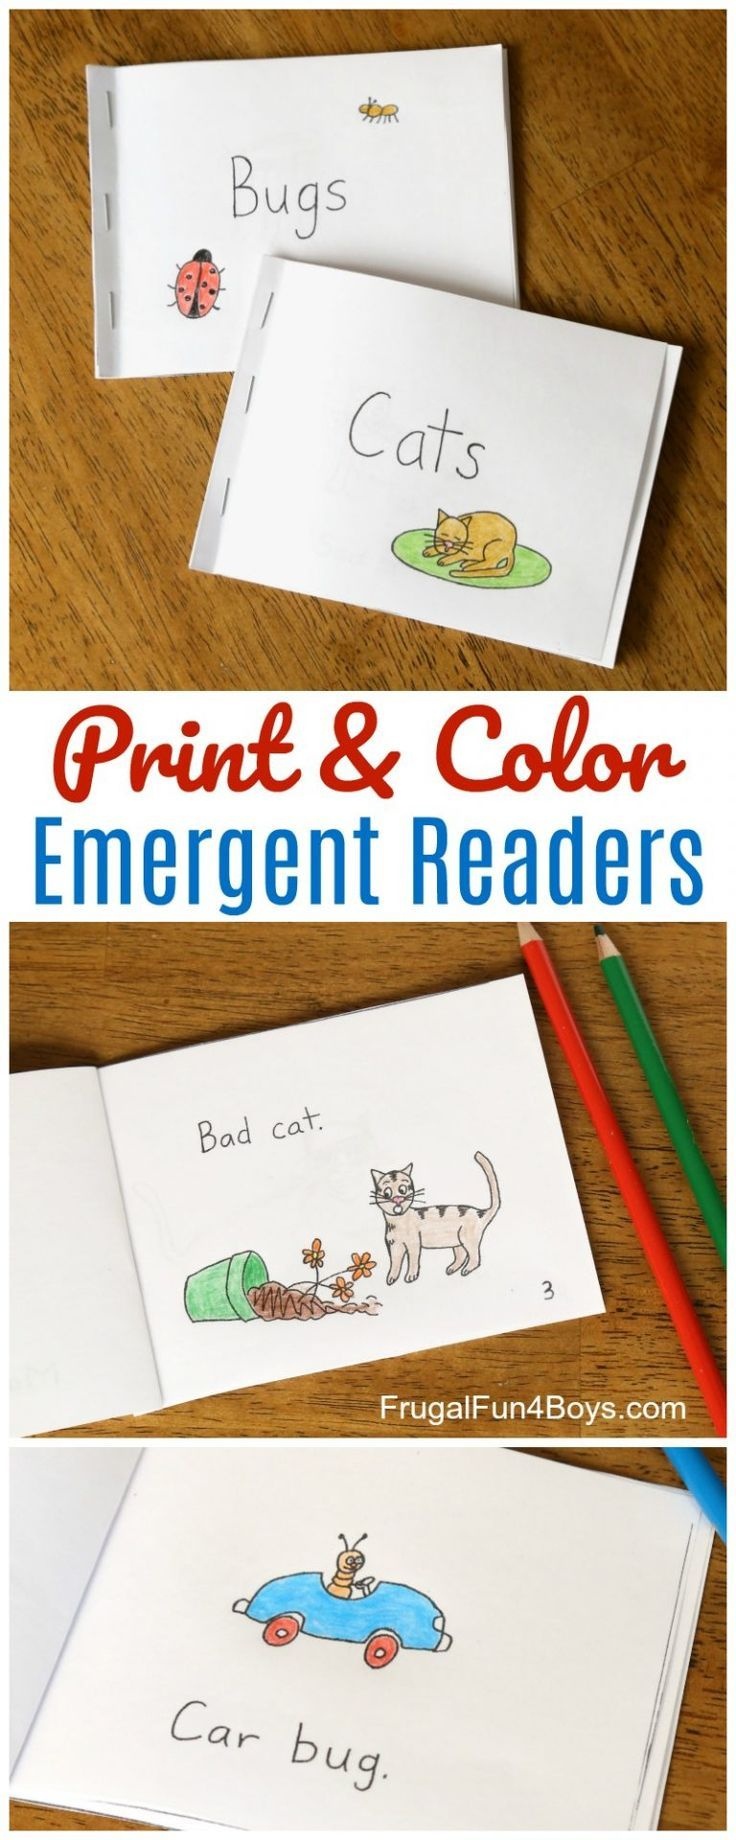 Free Printable Phonics Books For Kindergarten Free Printable